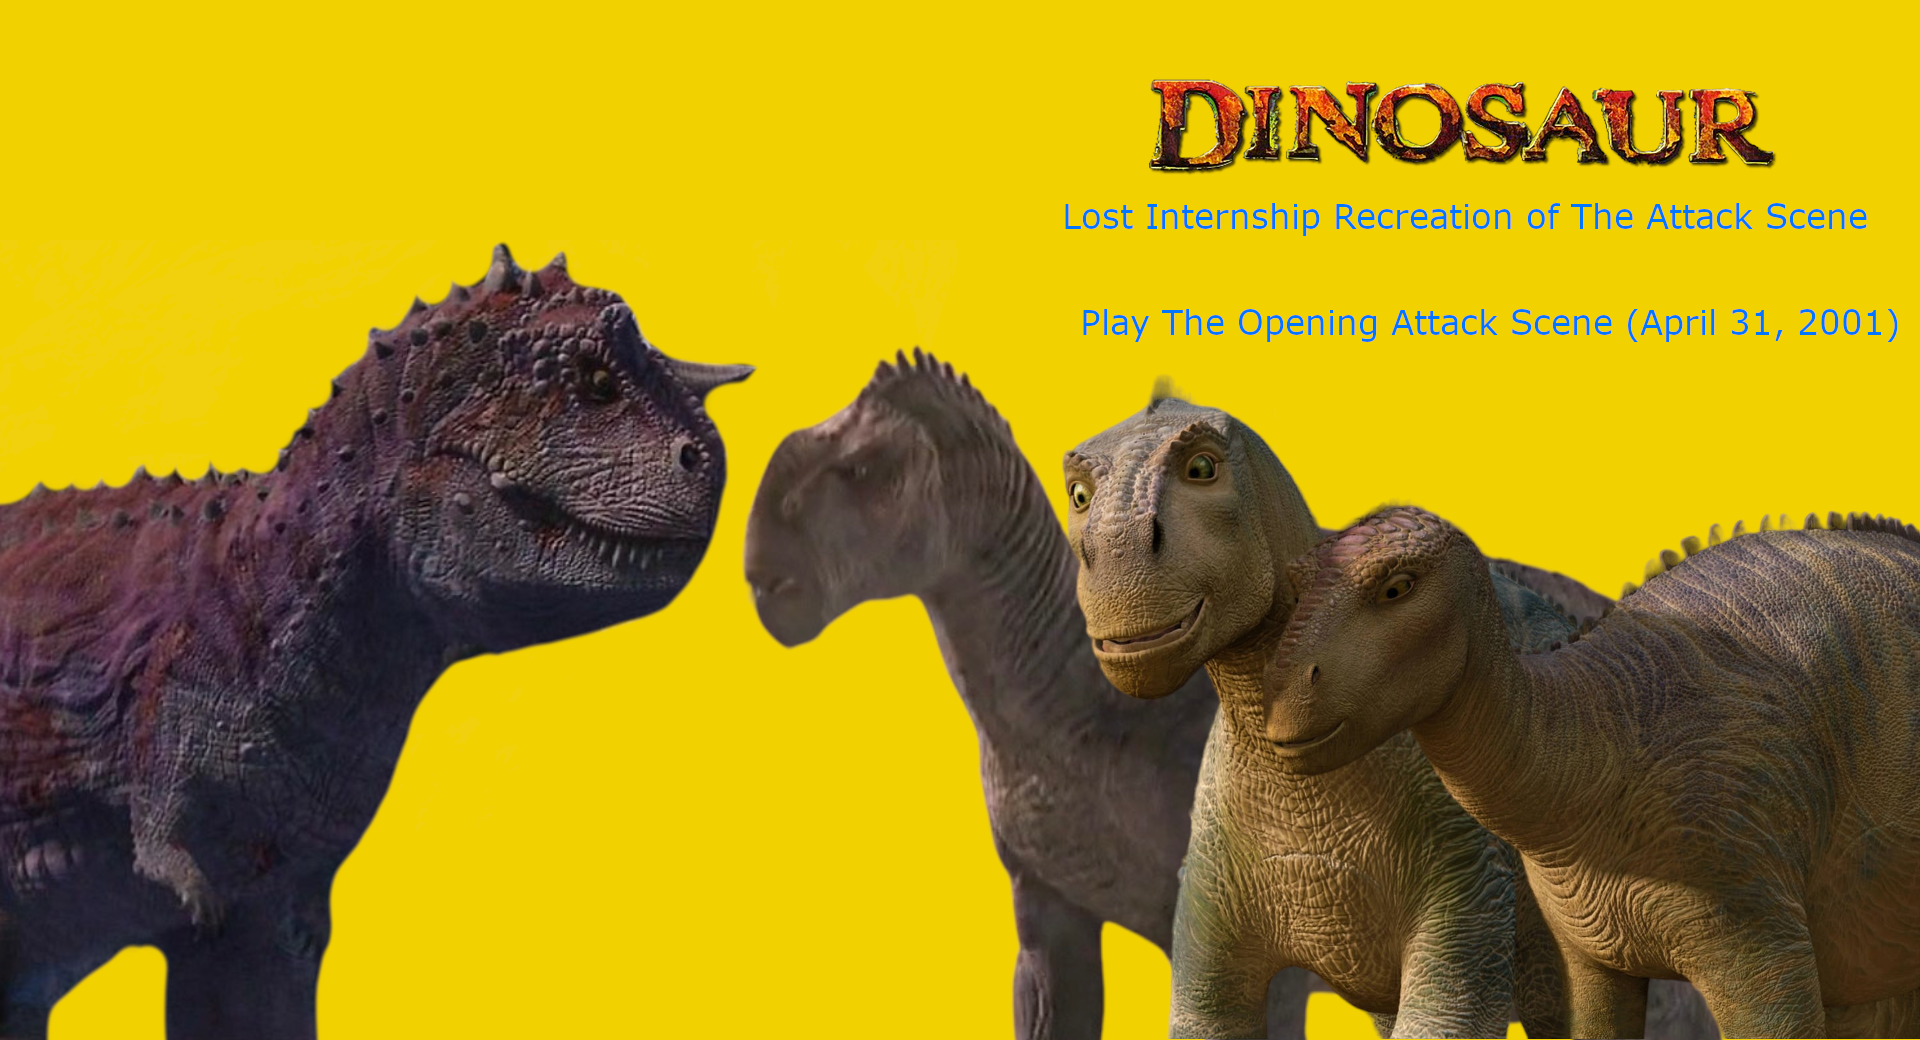 Disney's Dinosaur para Playstation 2 (2001)